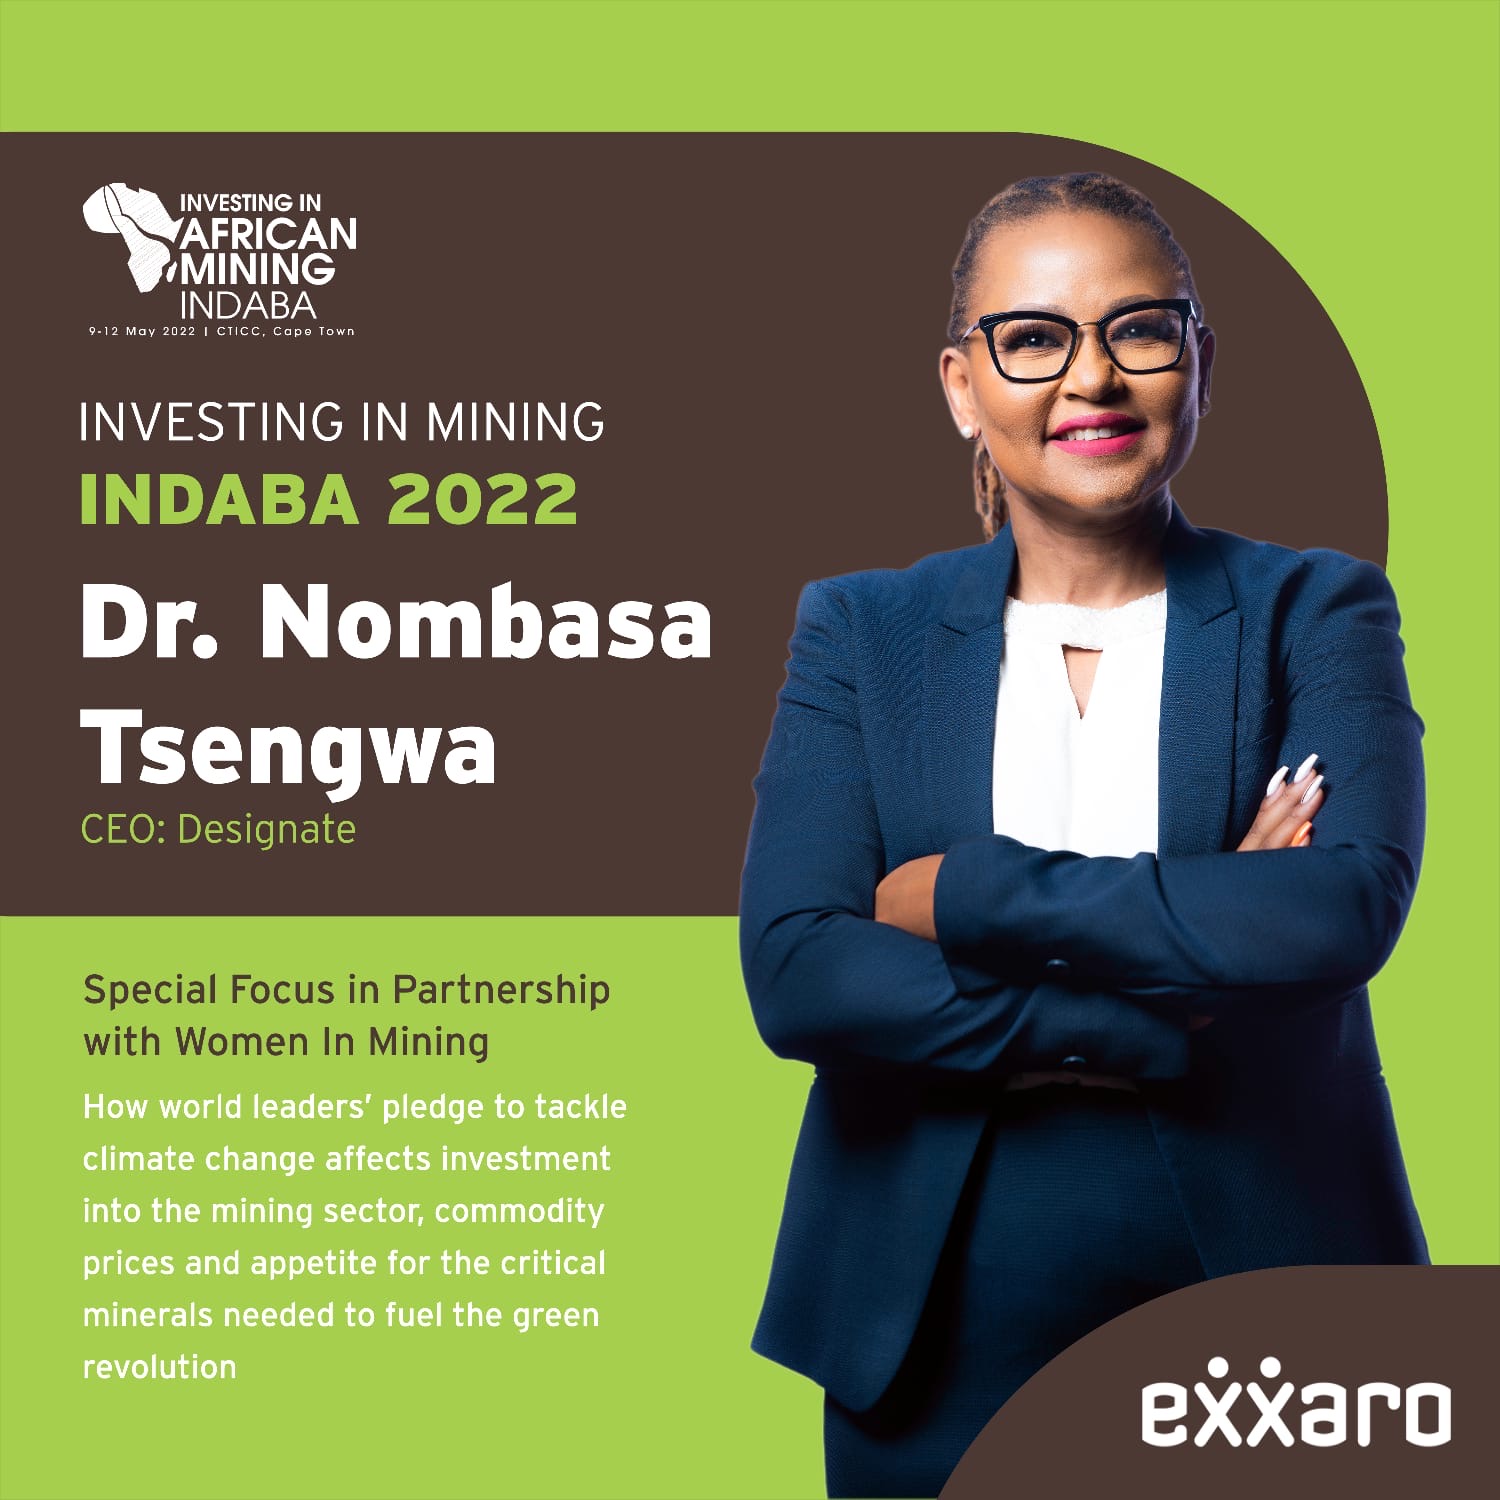 Dr Nombasa Tsengwa